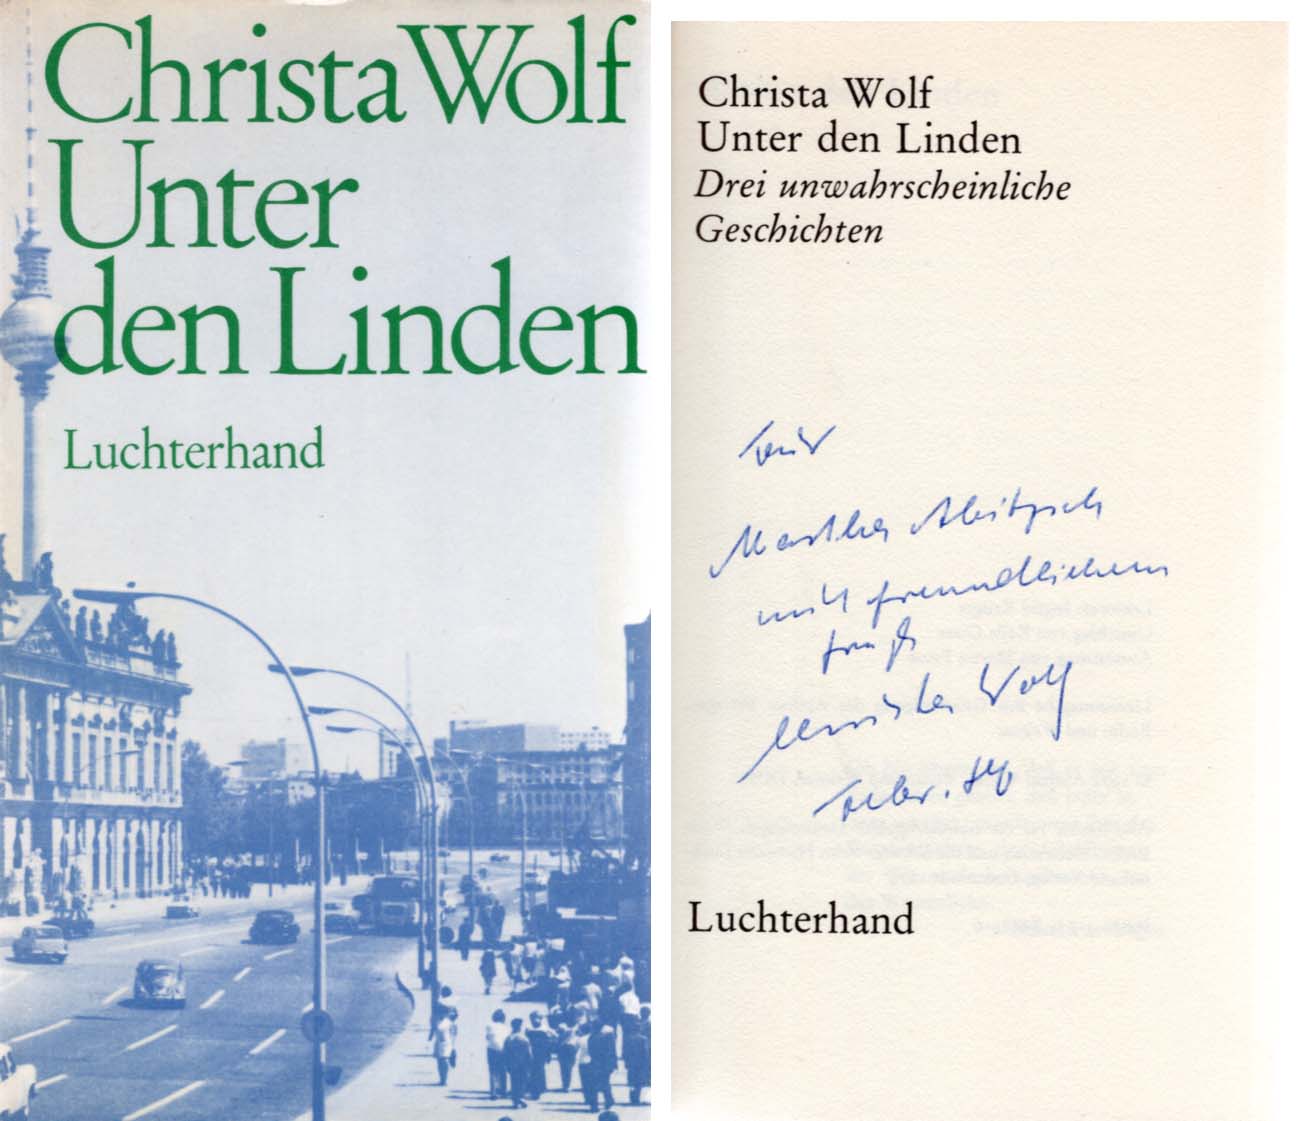 Christa Wolf Autograph Autogramm | ID 7978610229397